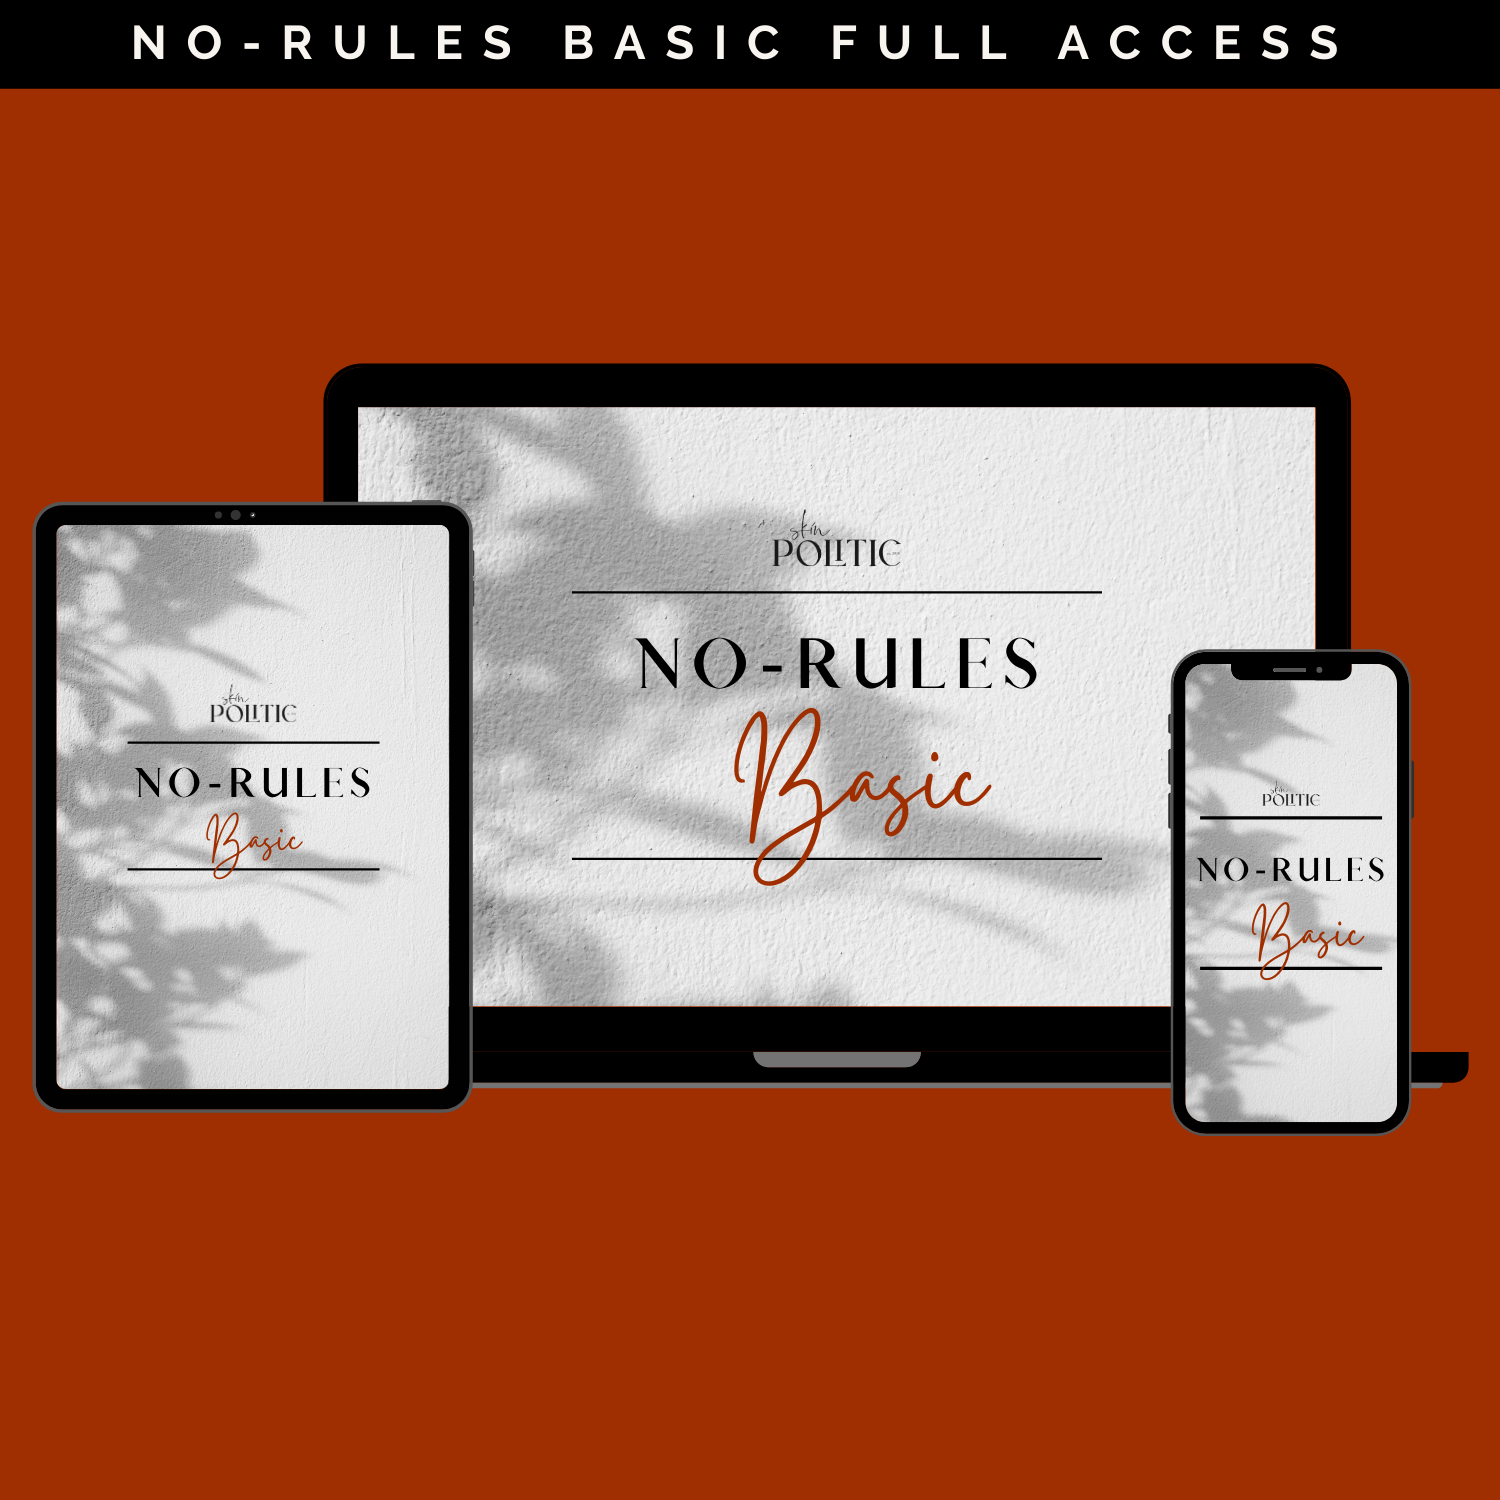 No-Rules Basic Full Access